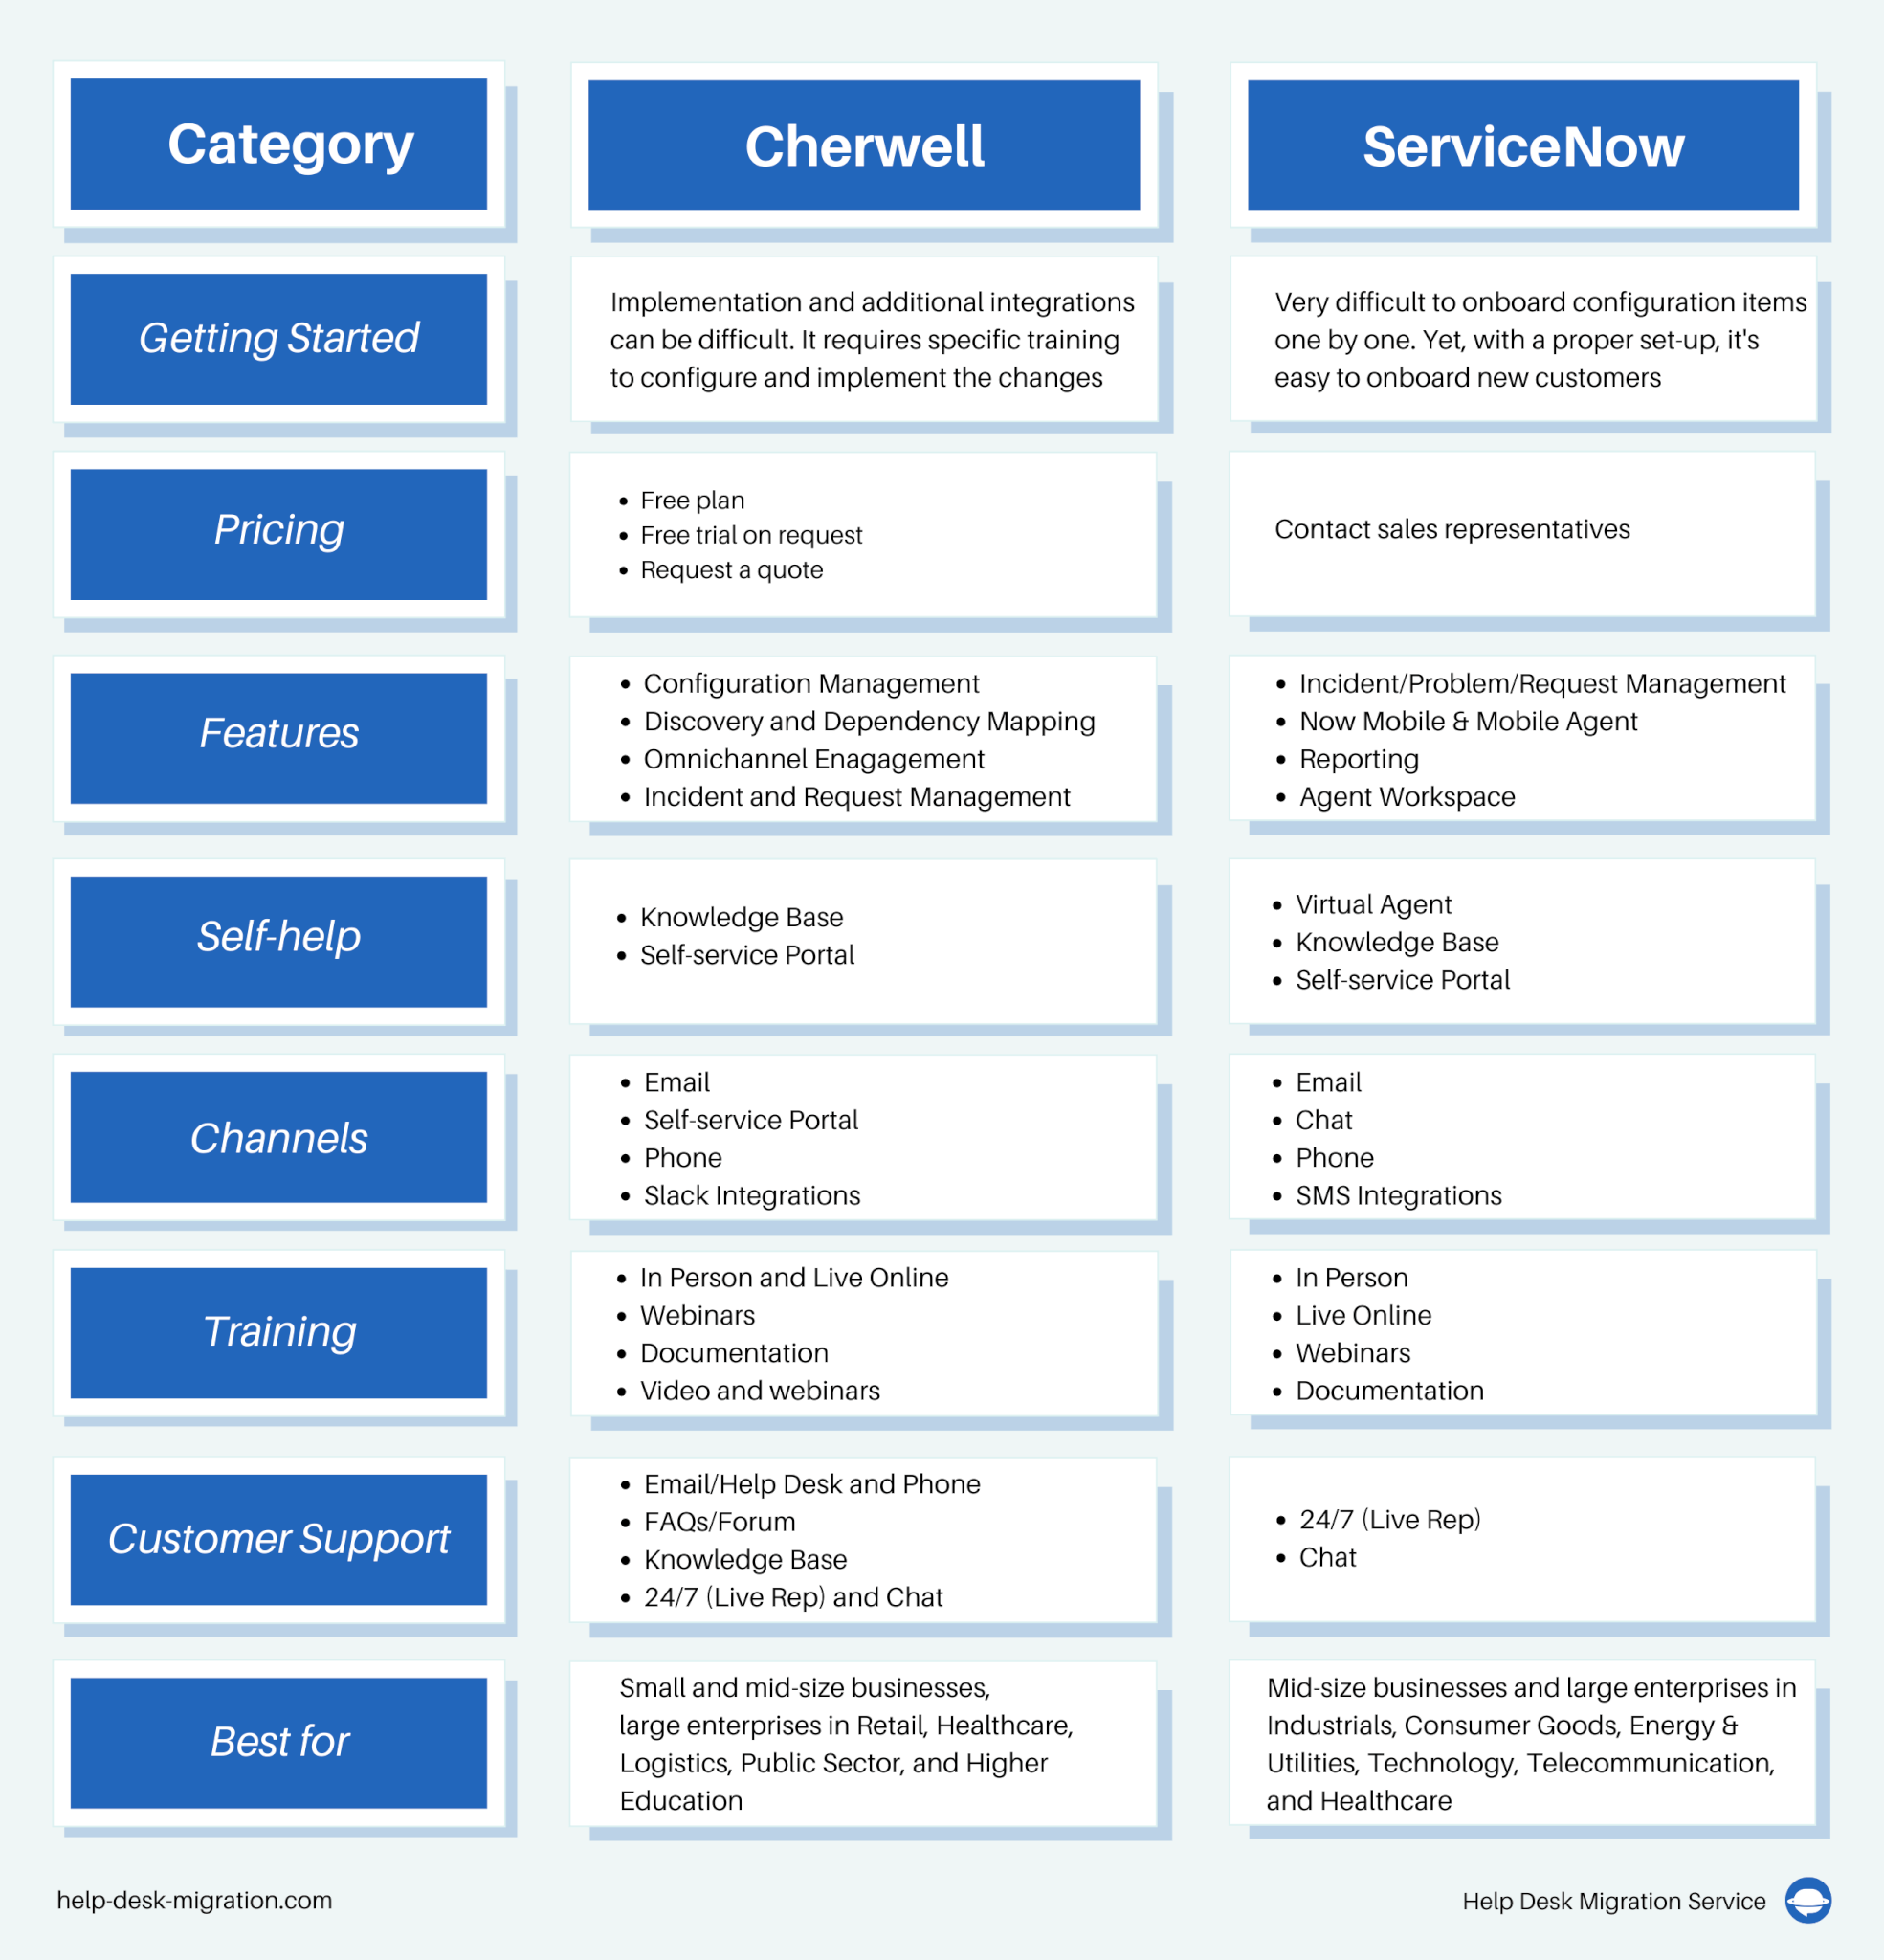 Cherwell vs ServiceNow